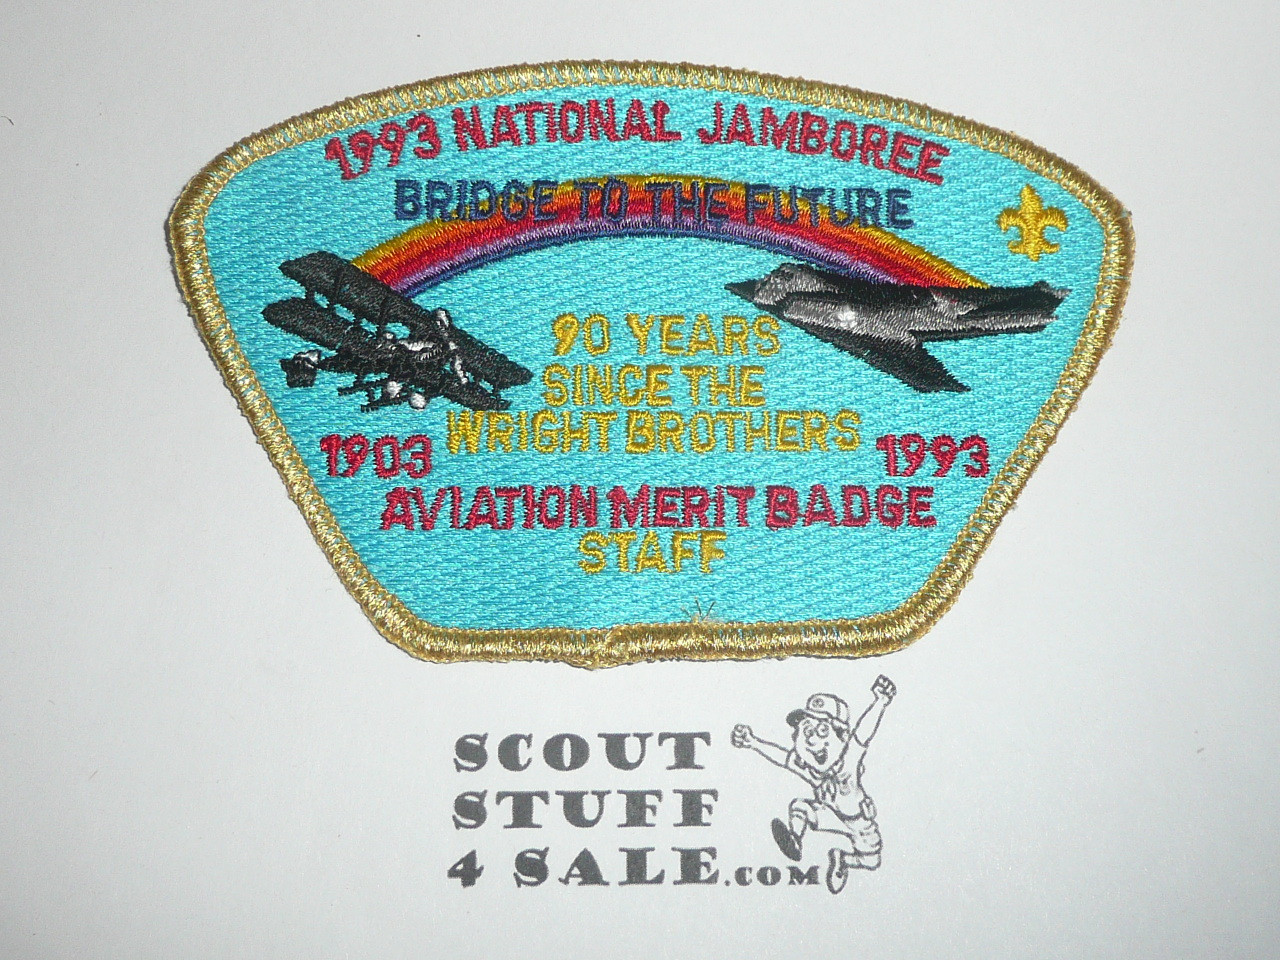 1993 National Jamboree JSP - Aviation Merit Badge Staff